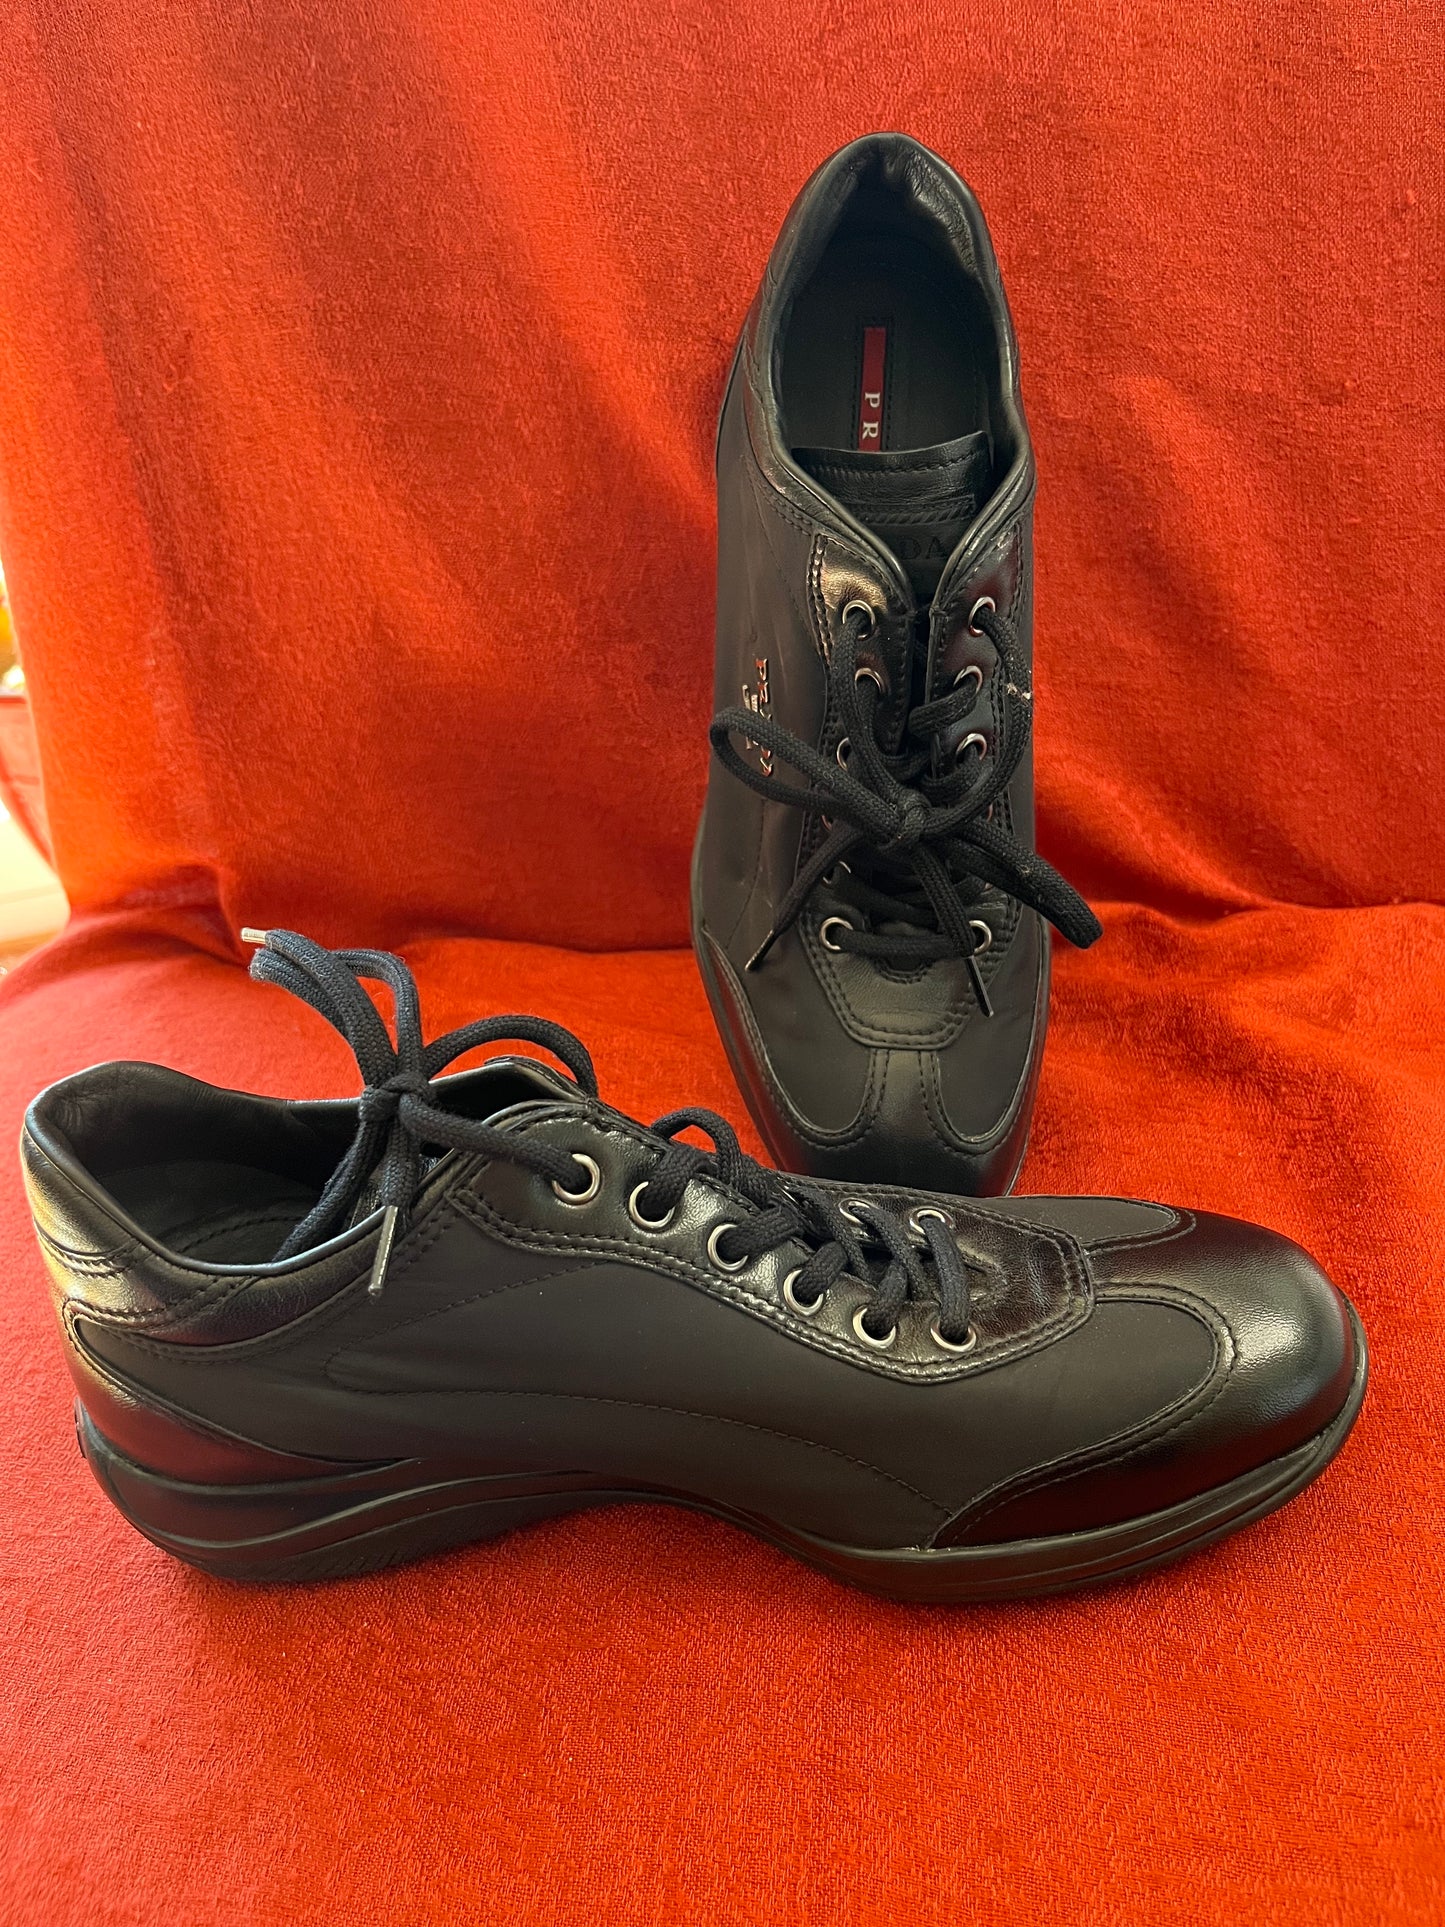 Trekken Stiptheid Misbruik Prada Nylon Sneakers with Saffiano Leather Trim Size 37 (6.5 US) –  CommunityWorx